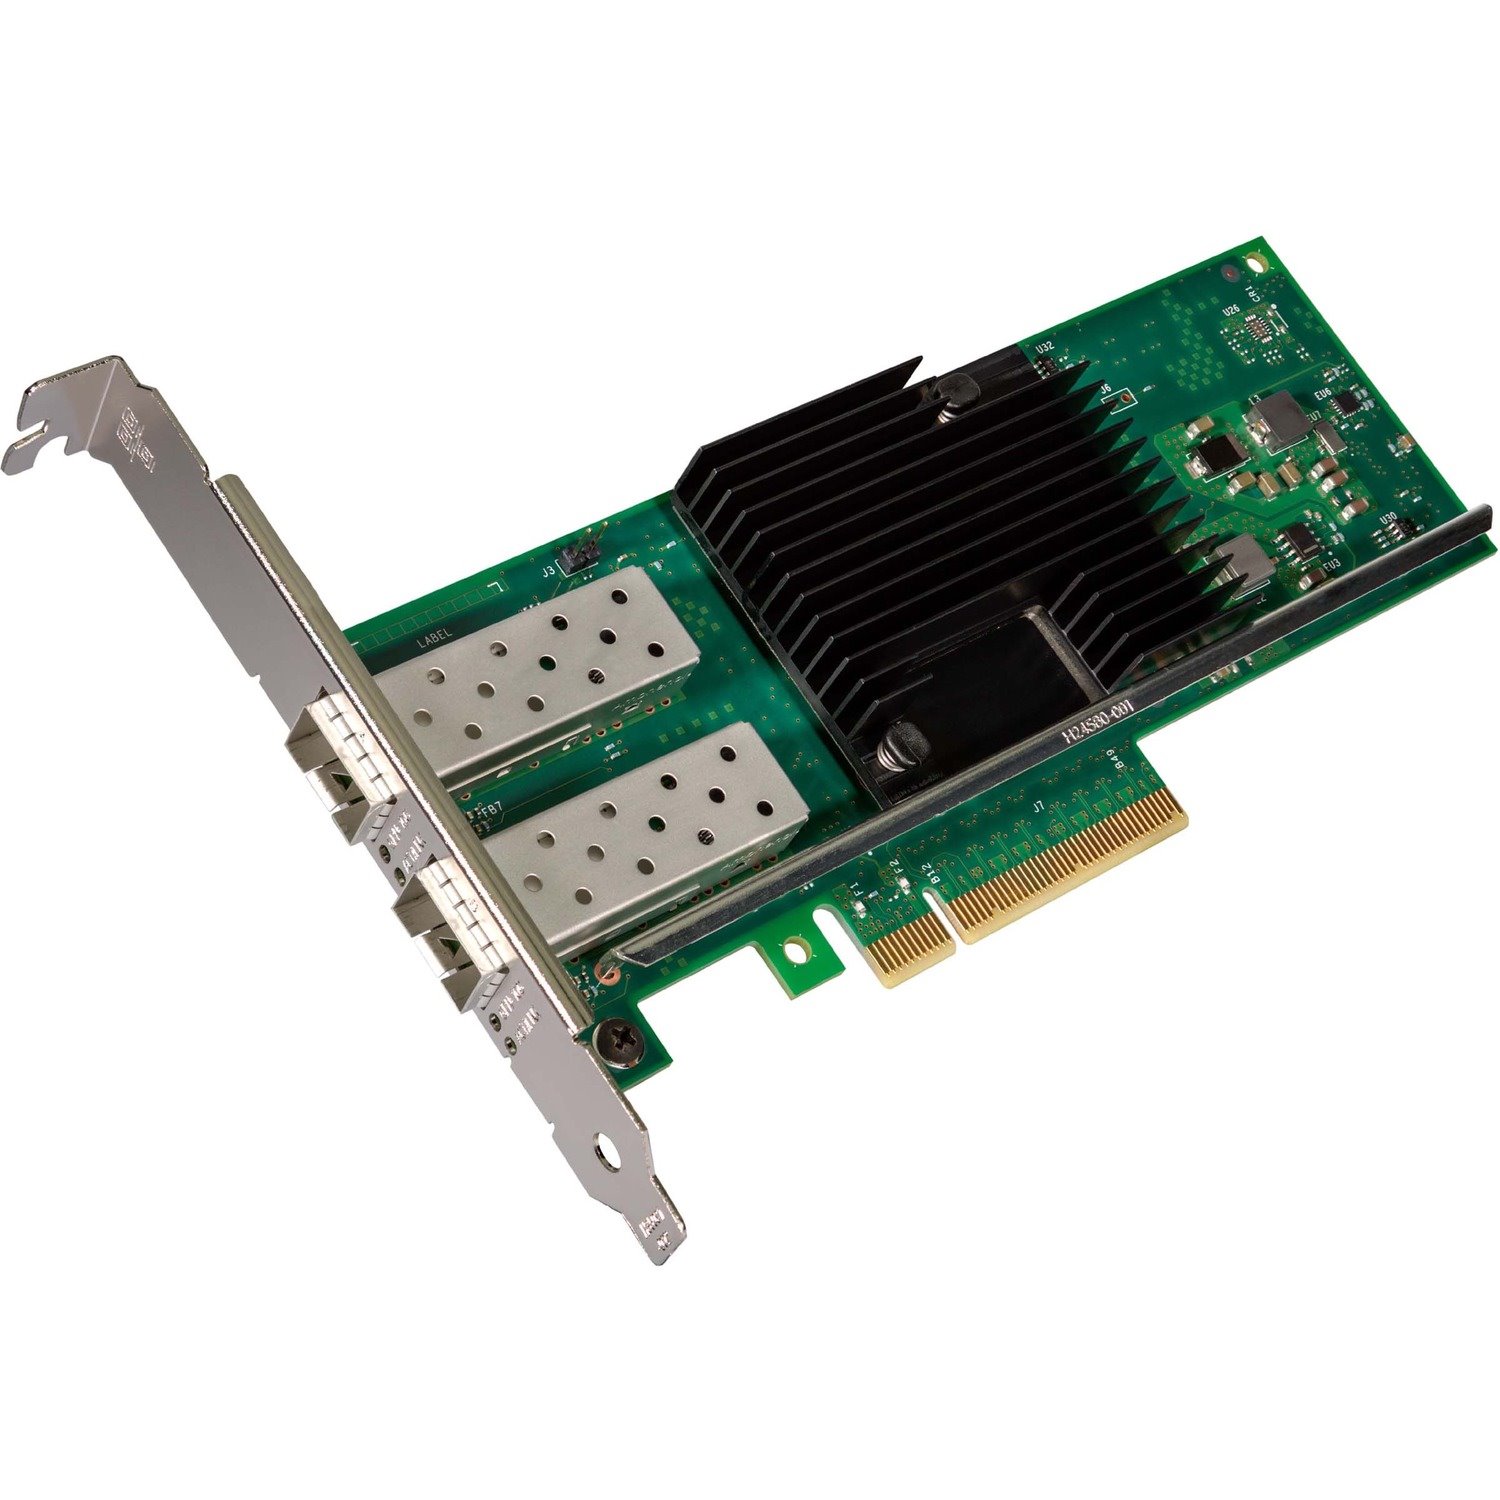 Intel X710 10Gigabit Ethernet Card for Server - 10GBase-X - Plug-in Card